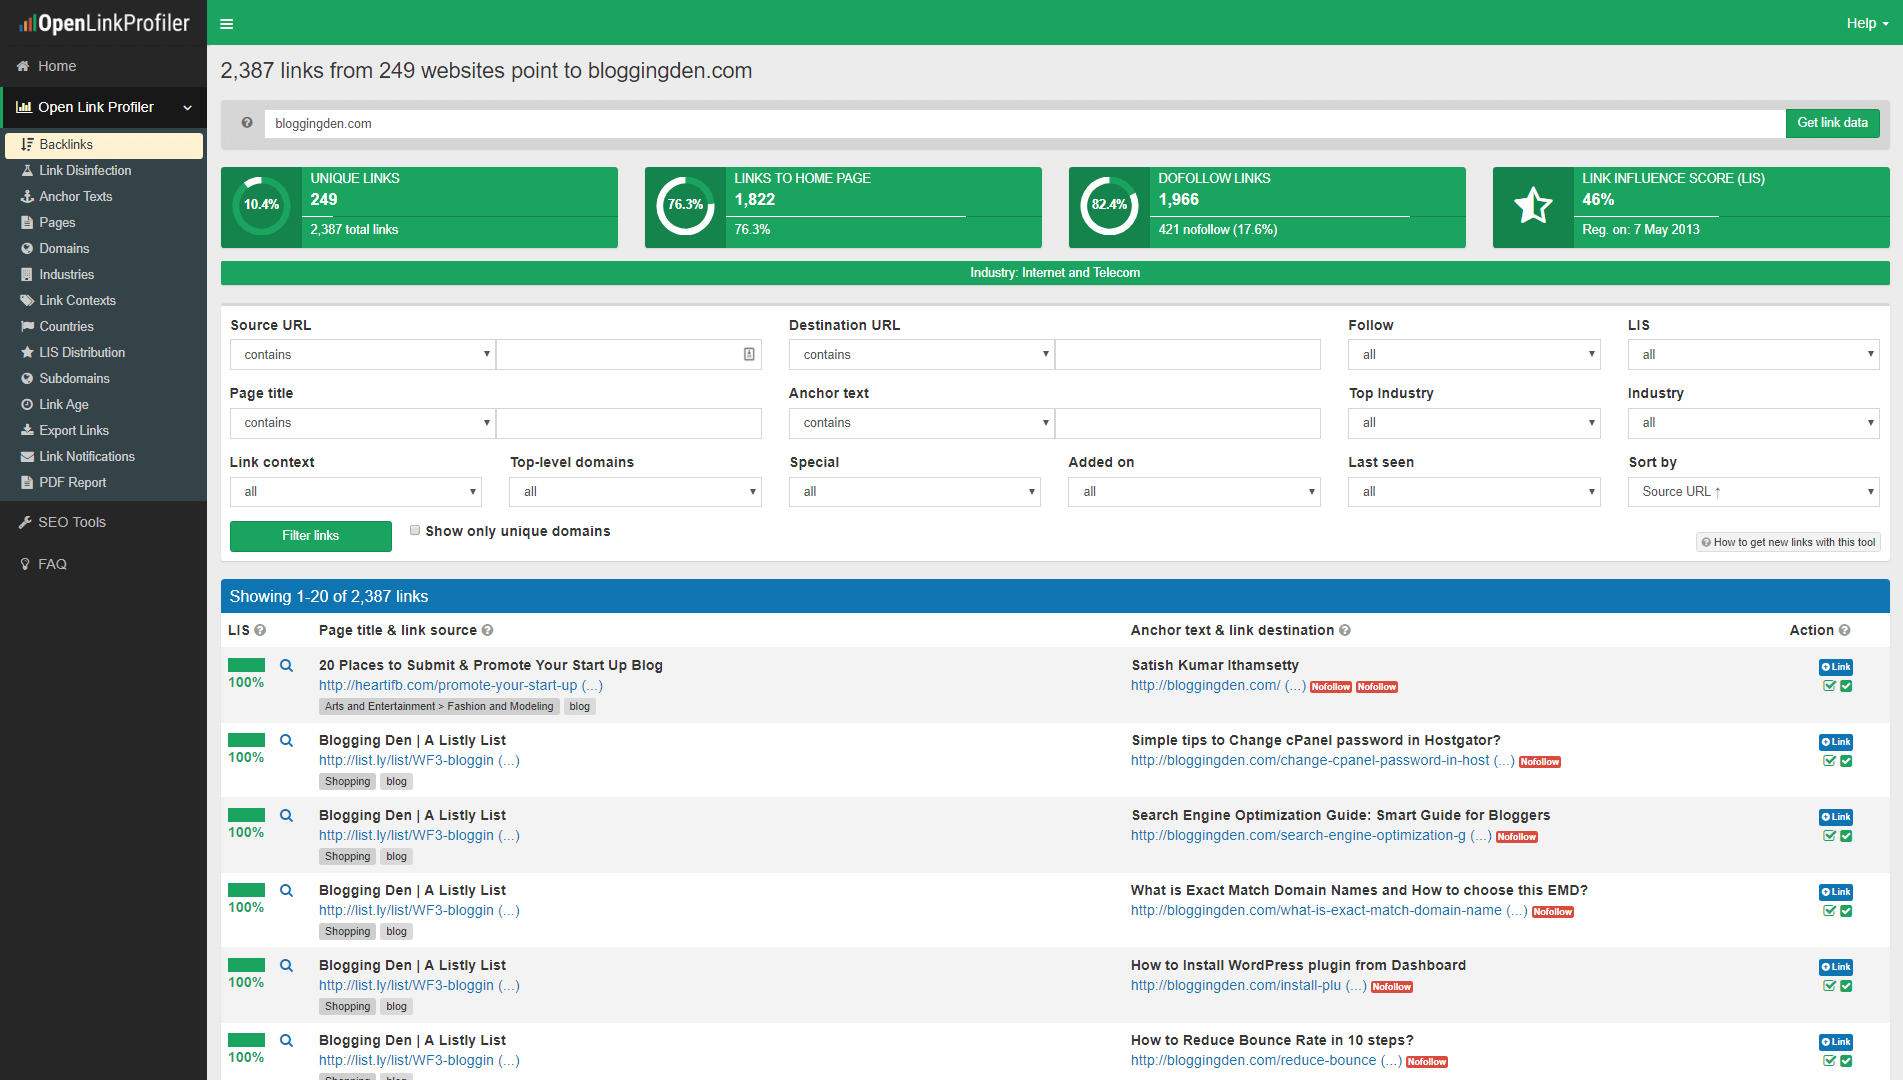 openlink profiler results